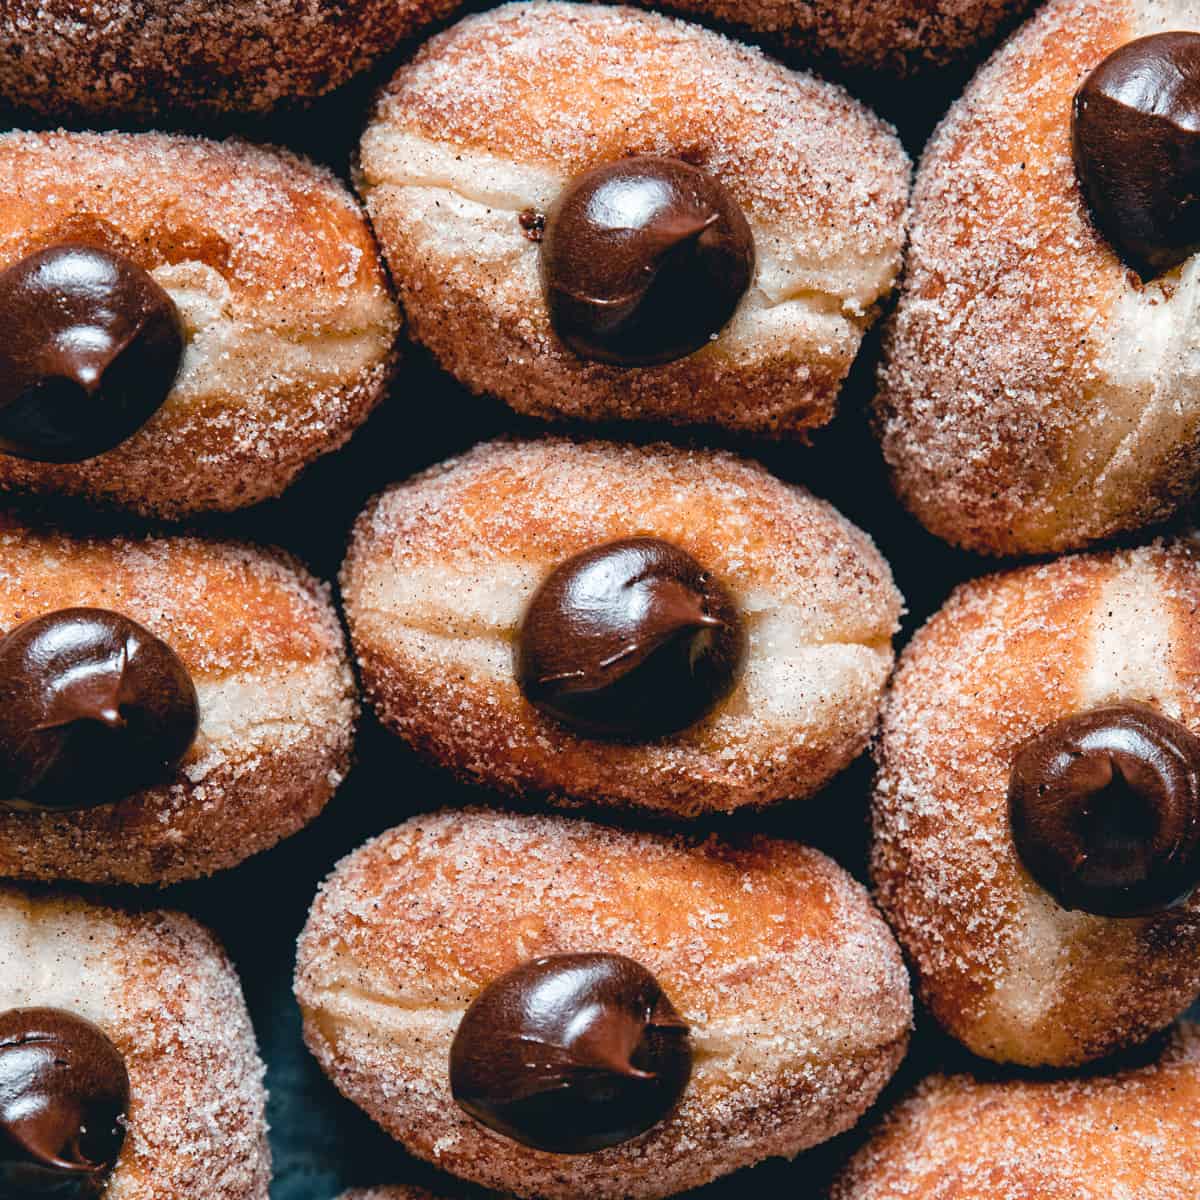 https://www.anasbakingchronicles.com/wp-content/uploads/2022/03/Chocolate-Brioche-Doughnuts-featured-image-2.jpg